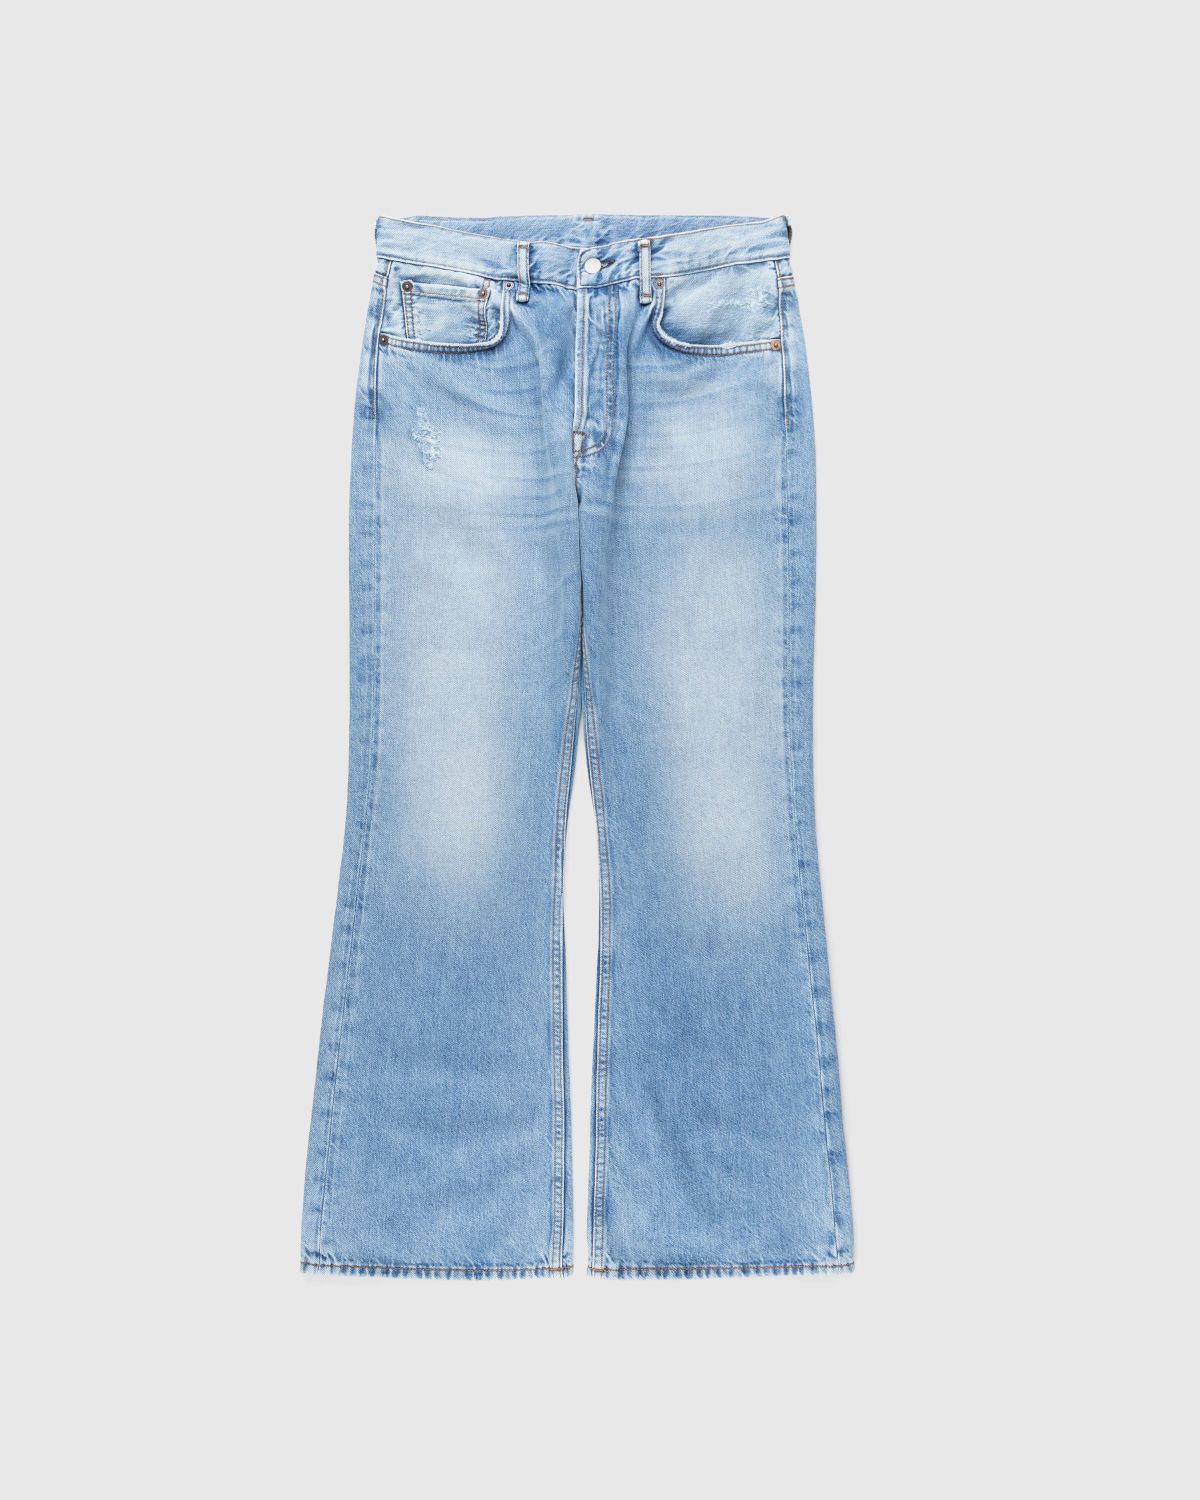 Acne Studios – Regular Fit Jeans 1992 Light Blue Vintage - Pants - Blue - Image 1